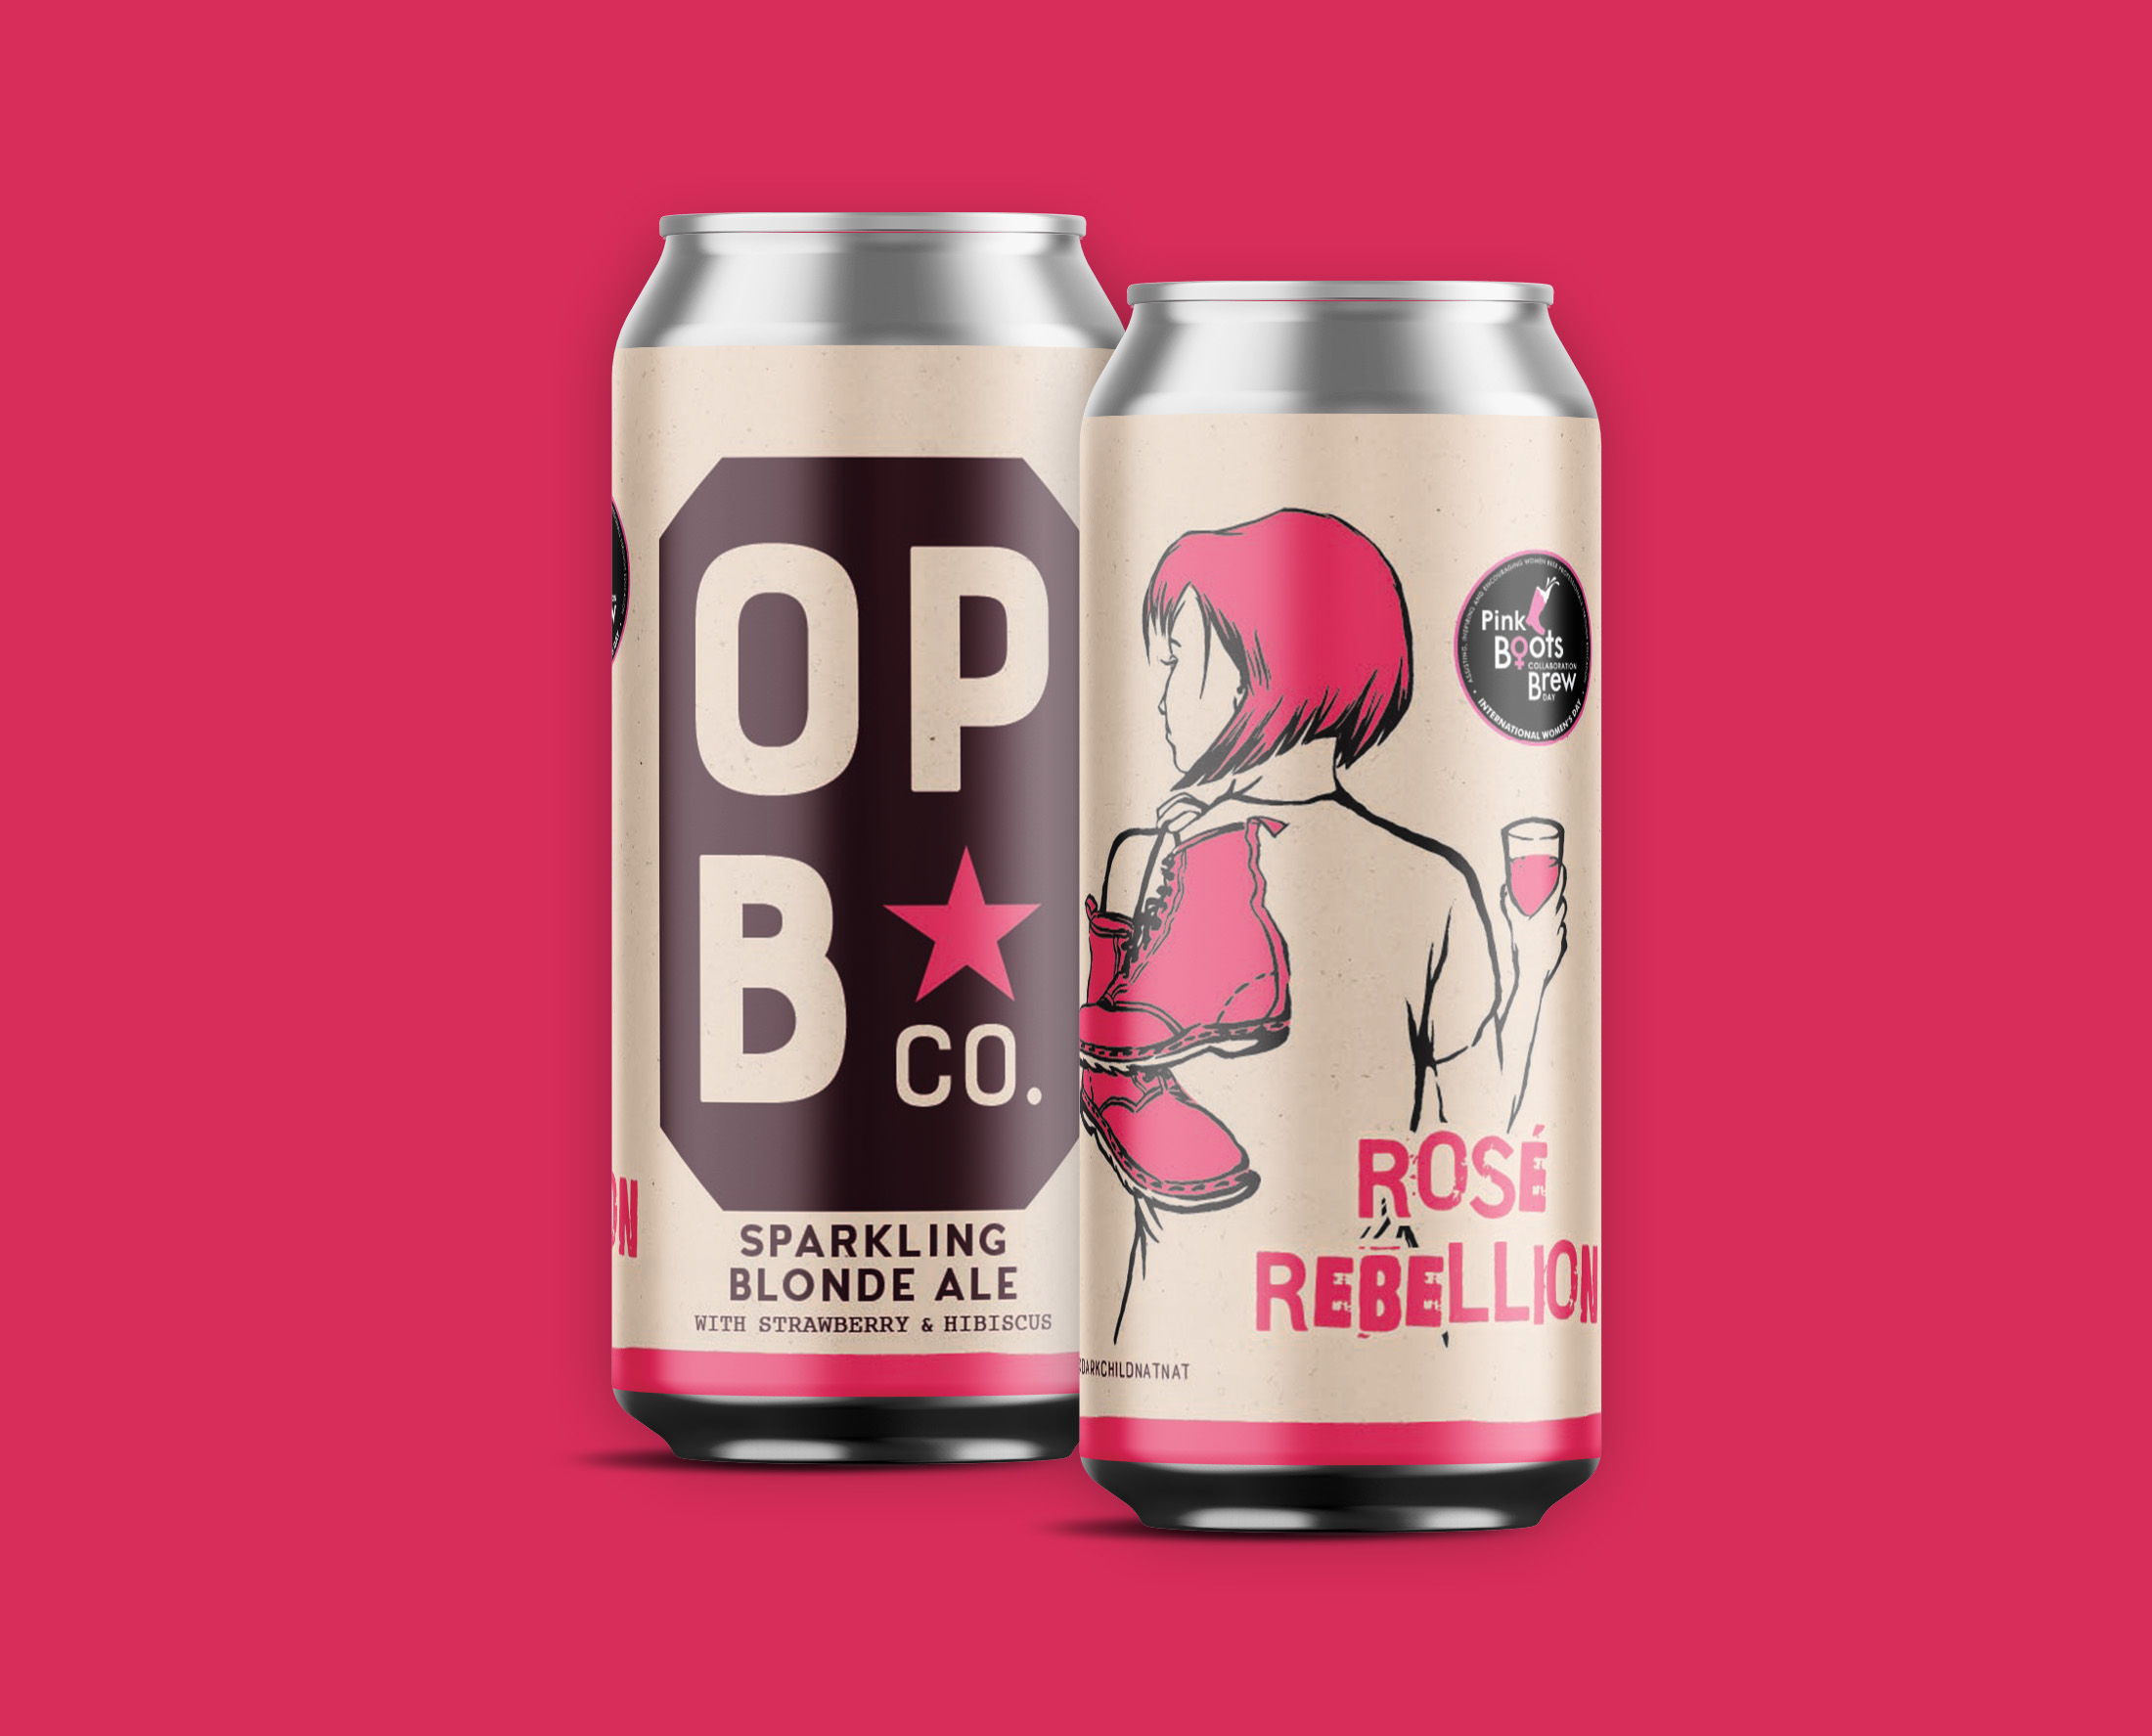 Digital rendering of Rose Rebellion, sparking blonde ale beer. 2 cans